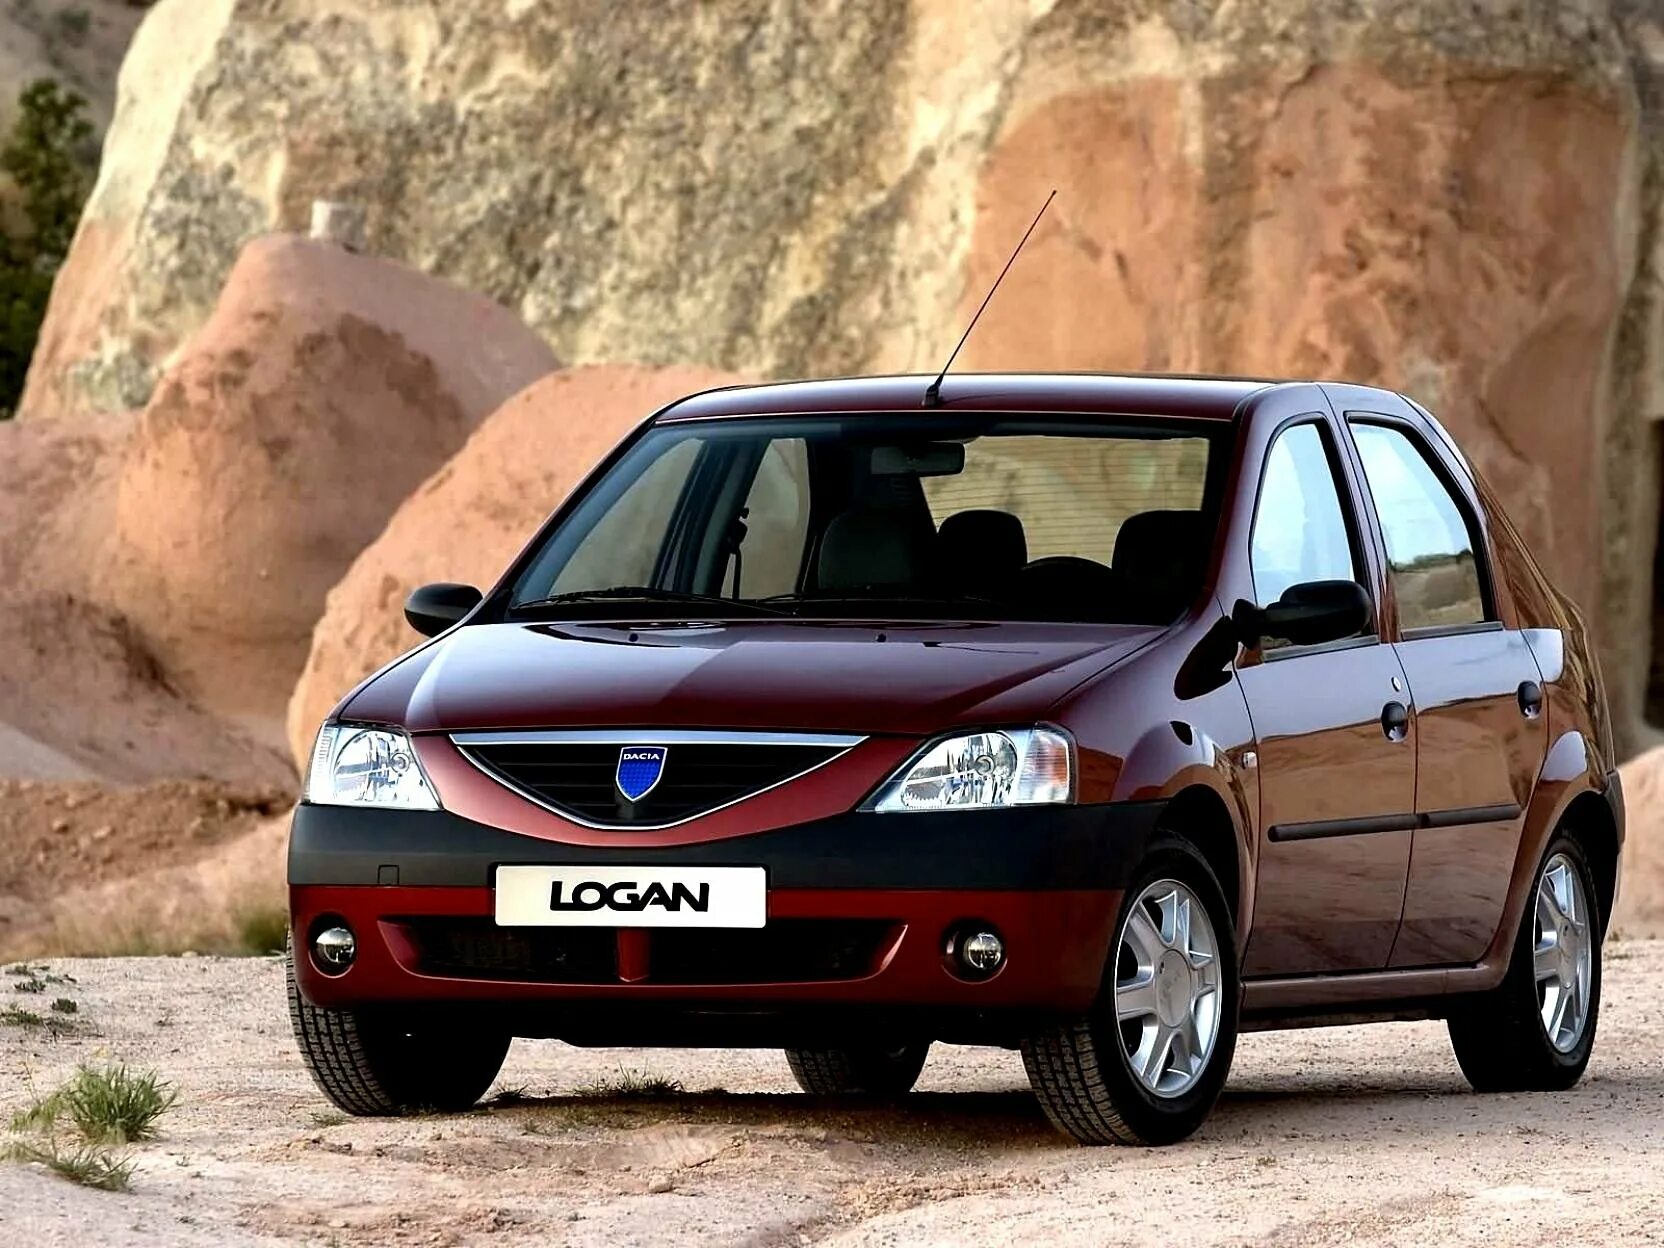 Рено 1 поколение. Dacia Logan 1. Рено Логан 1.6 2004. Машина Ренаульт Логан. Dacia Logan 2004.